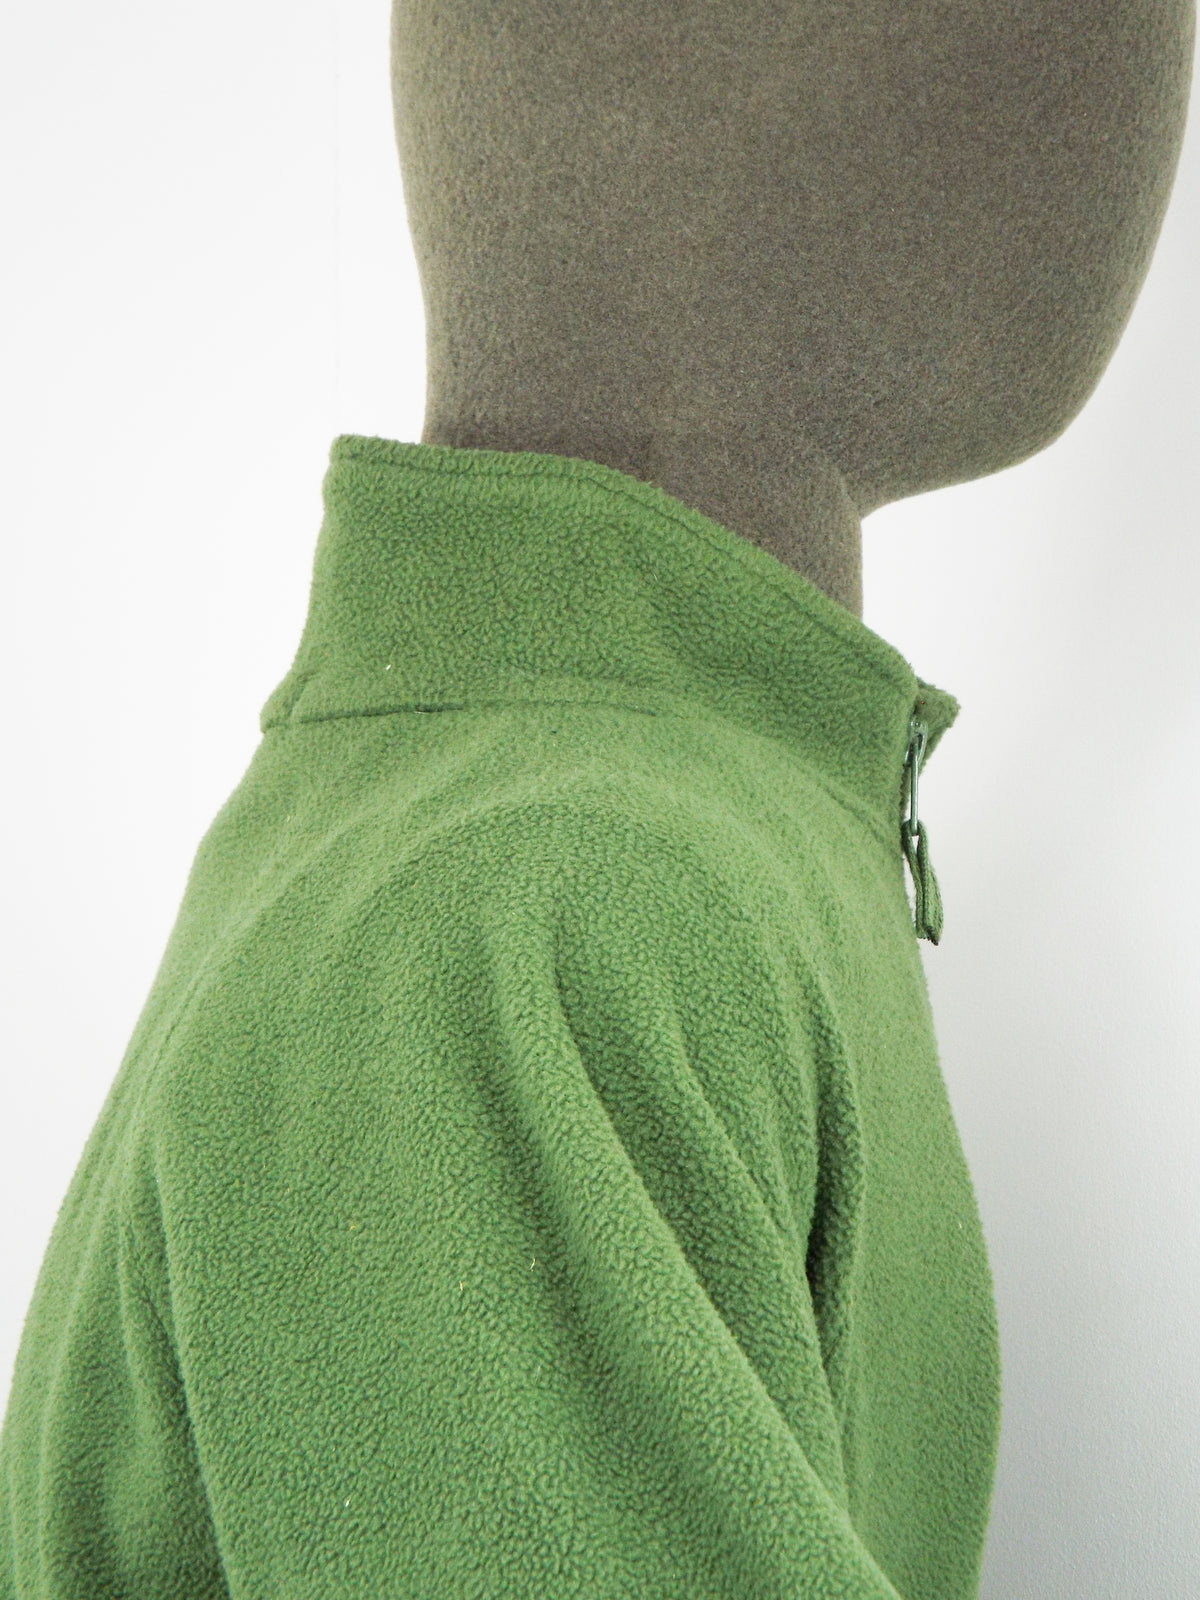 British Light Green Military Fleece / Thermal Liner Jacket for Men ...